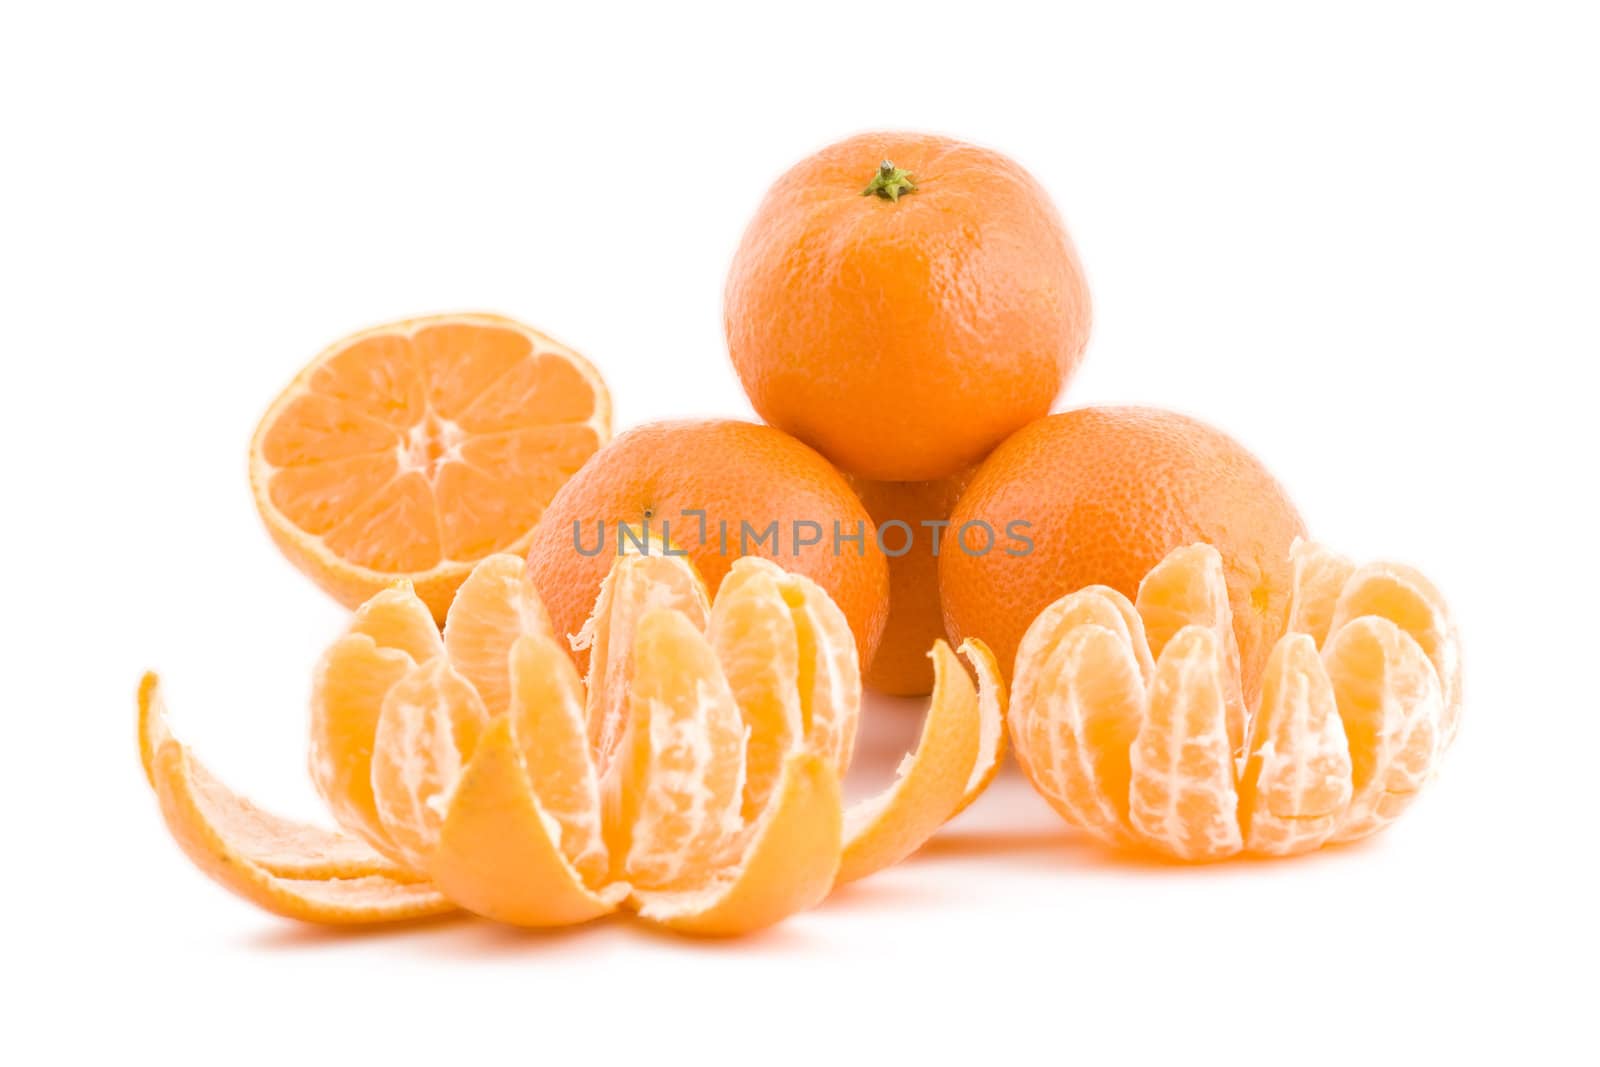 Tangerines on white by Gbuglok